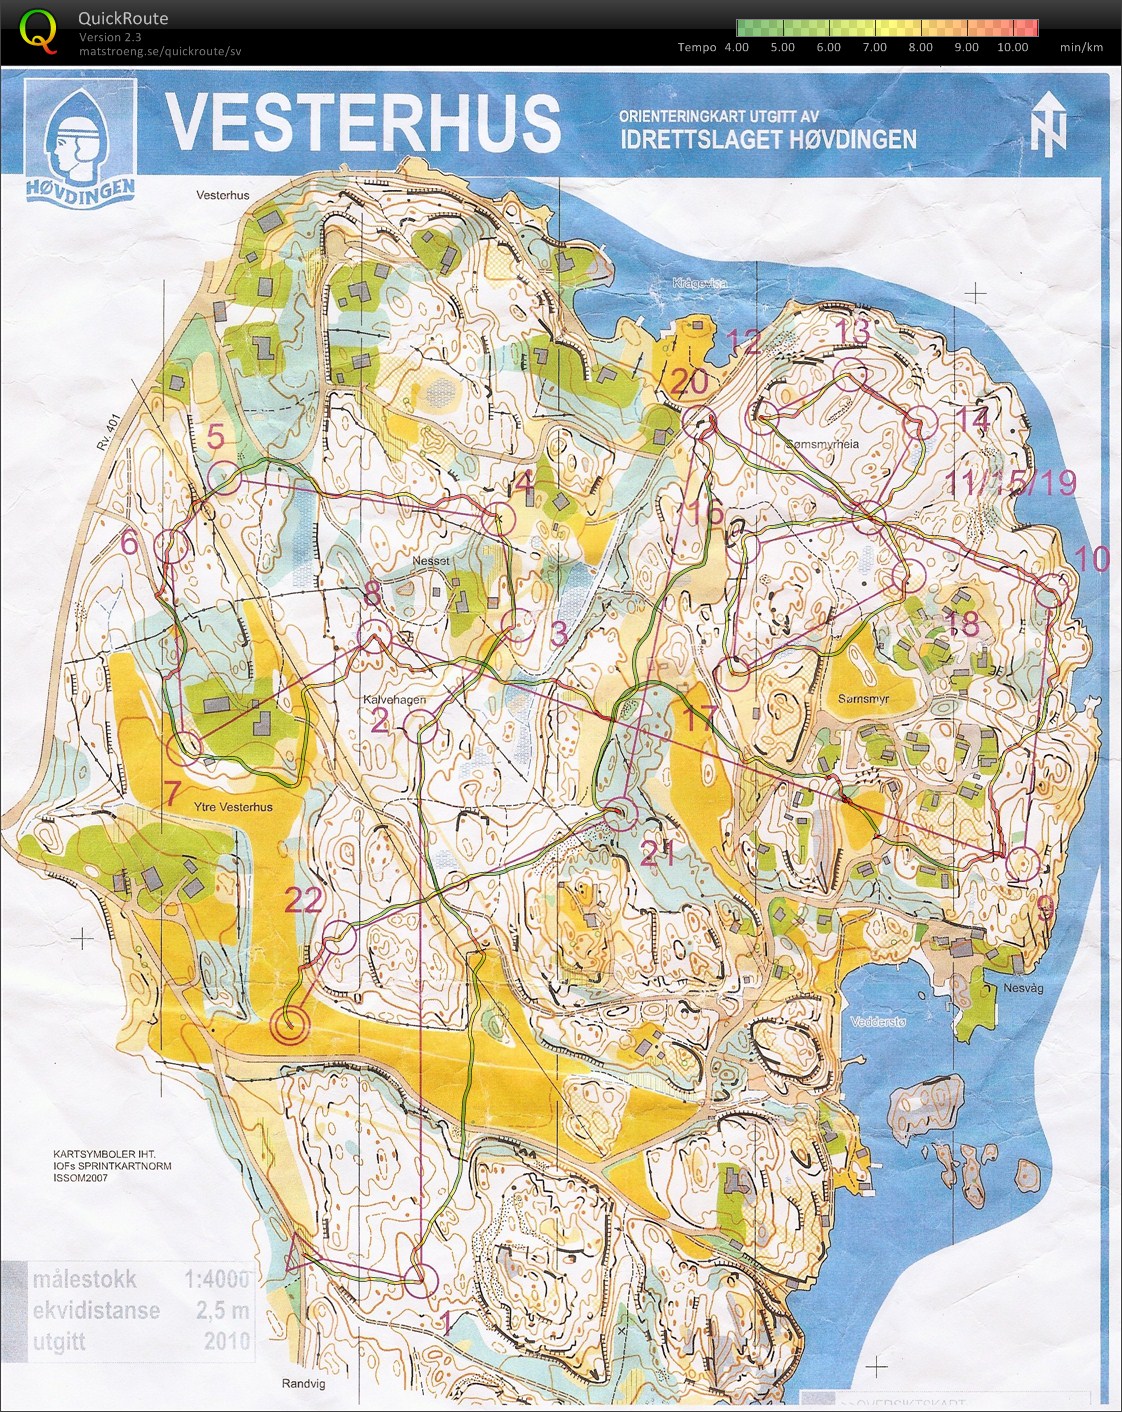 Träning Kristiansand1 karta1 (2010-11-03)